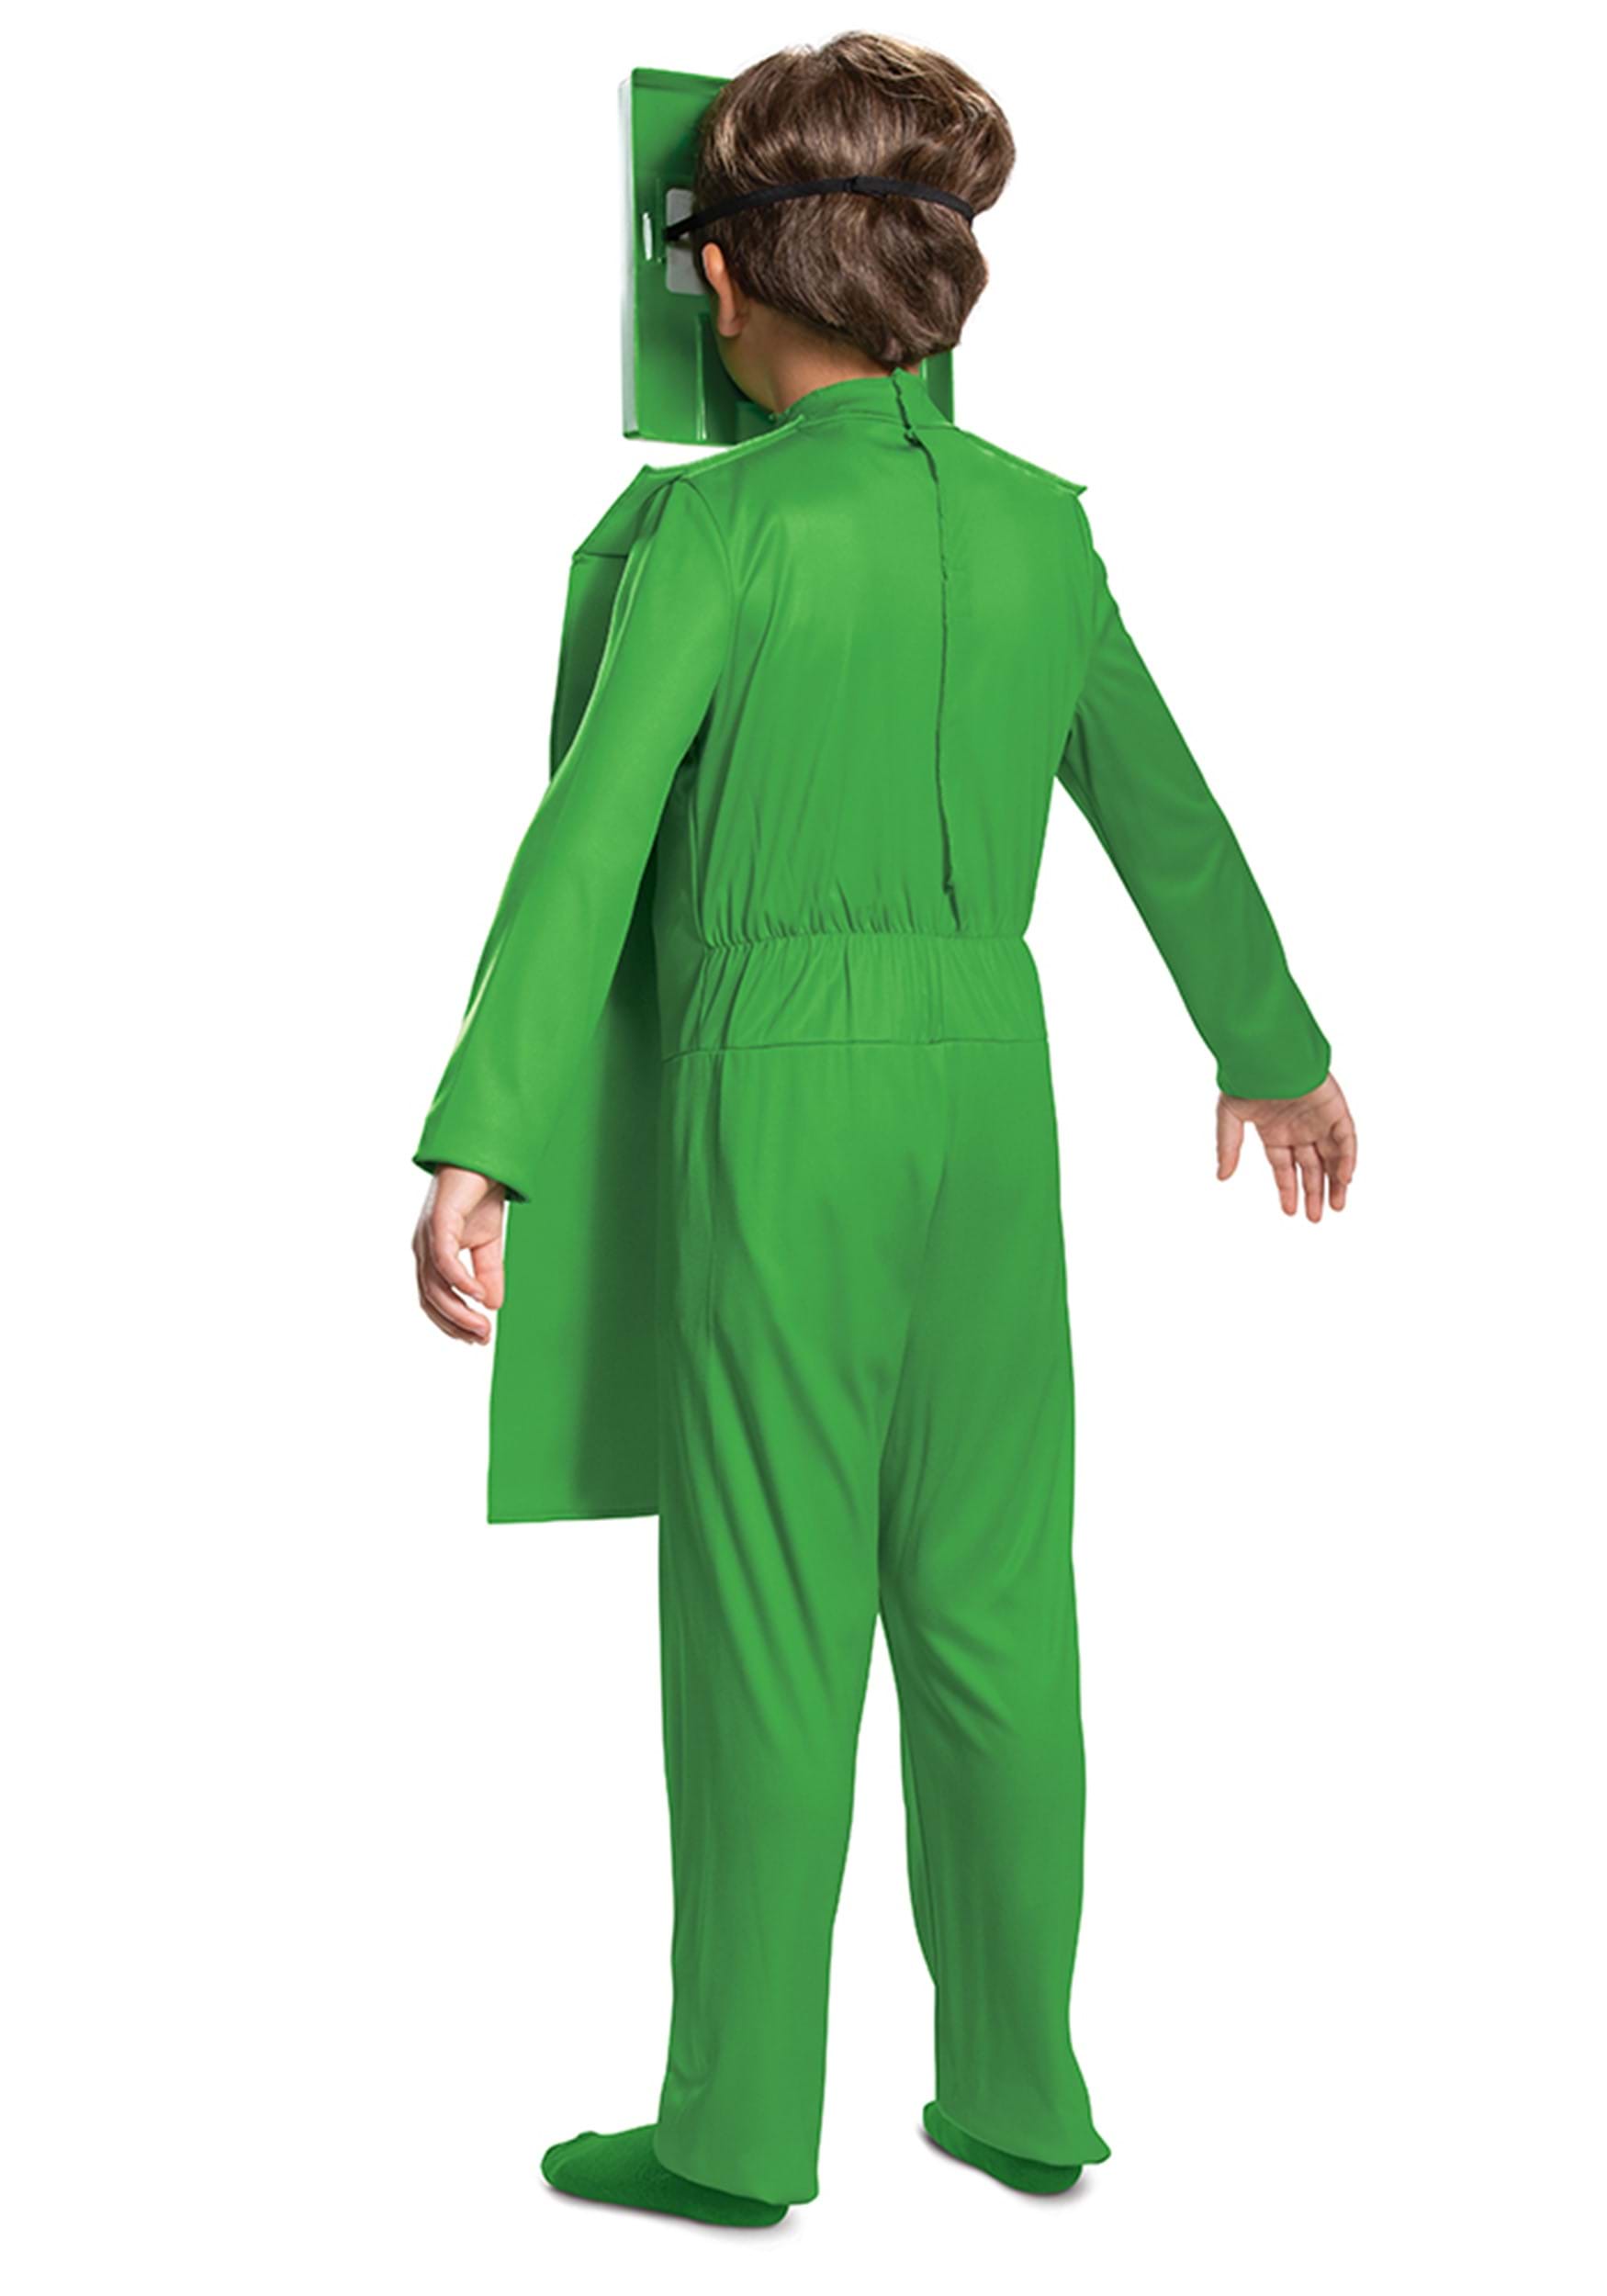 Minecraft Creeper Deluxe Costume for Boys